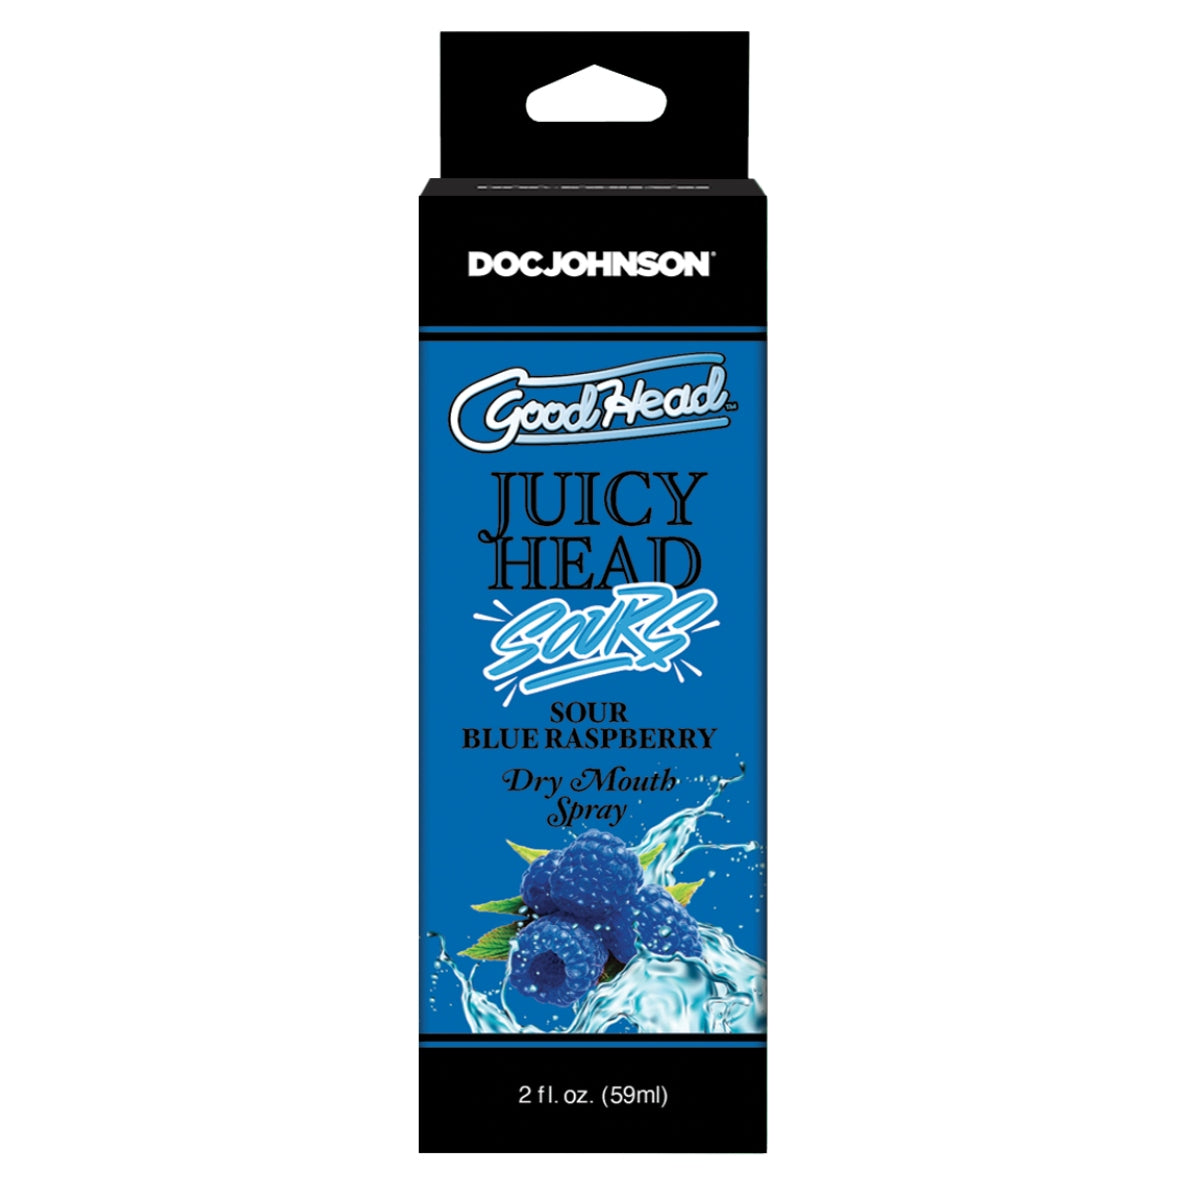 GoodHead | Juicy Head Sours Dry Mouth Spray Sour Blue Raspberry - 2 fl oz / 59ml